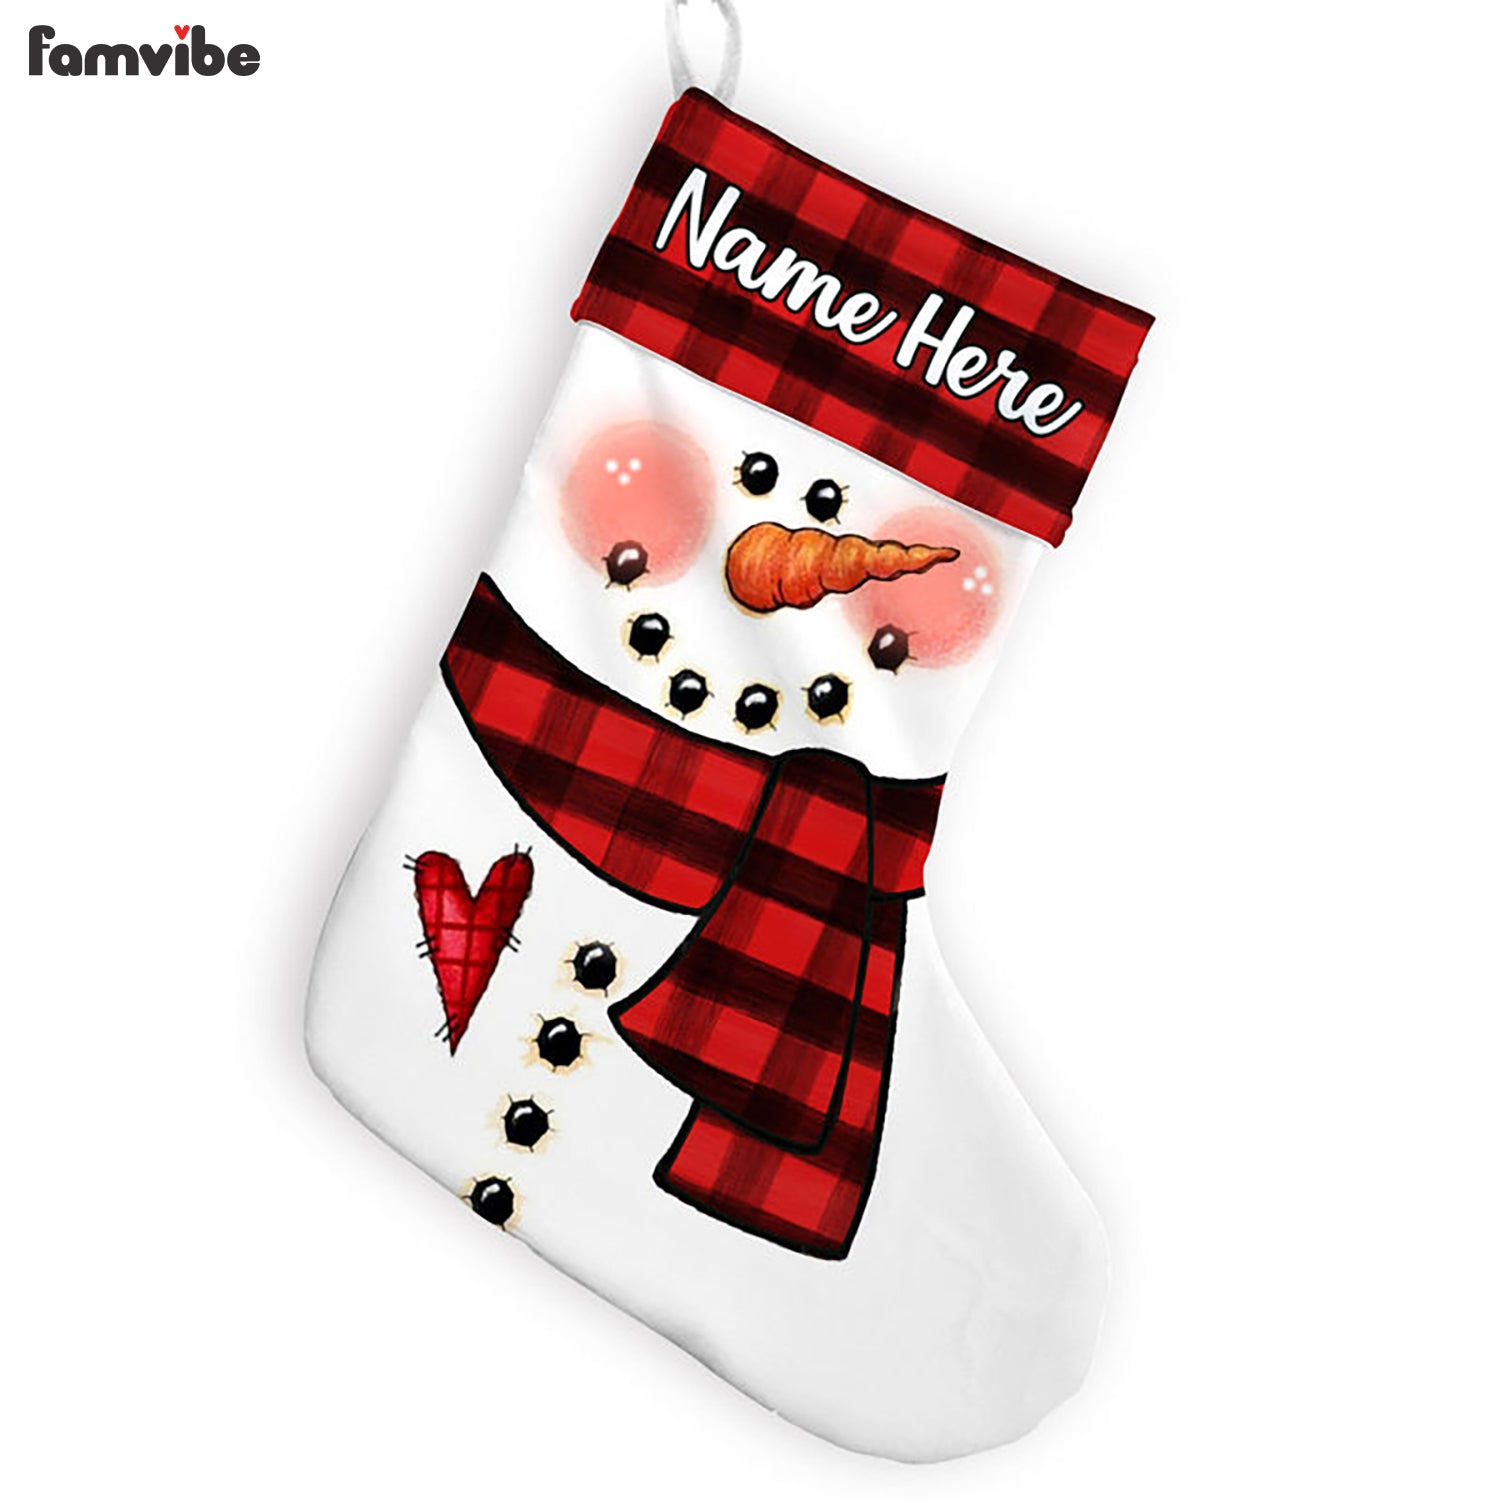 Personalized Snowman Family Christmas Stocking OB283 30O58